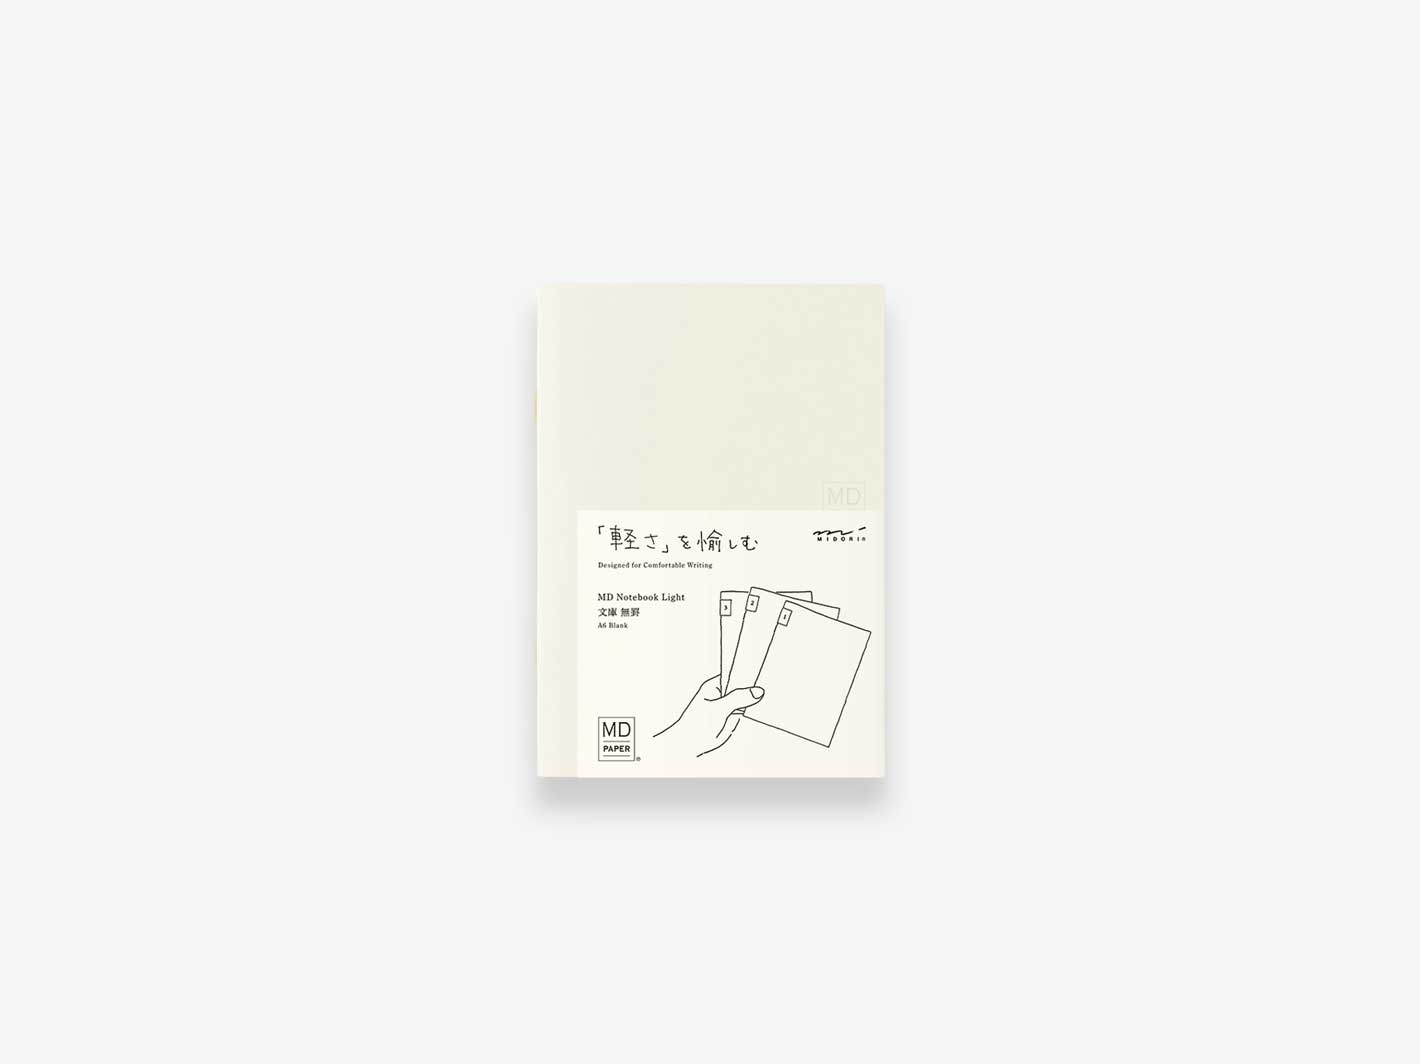 MD Notebook Light A6 Blank 3-pack